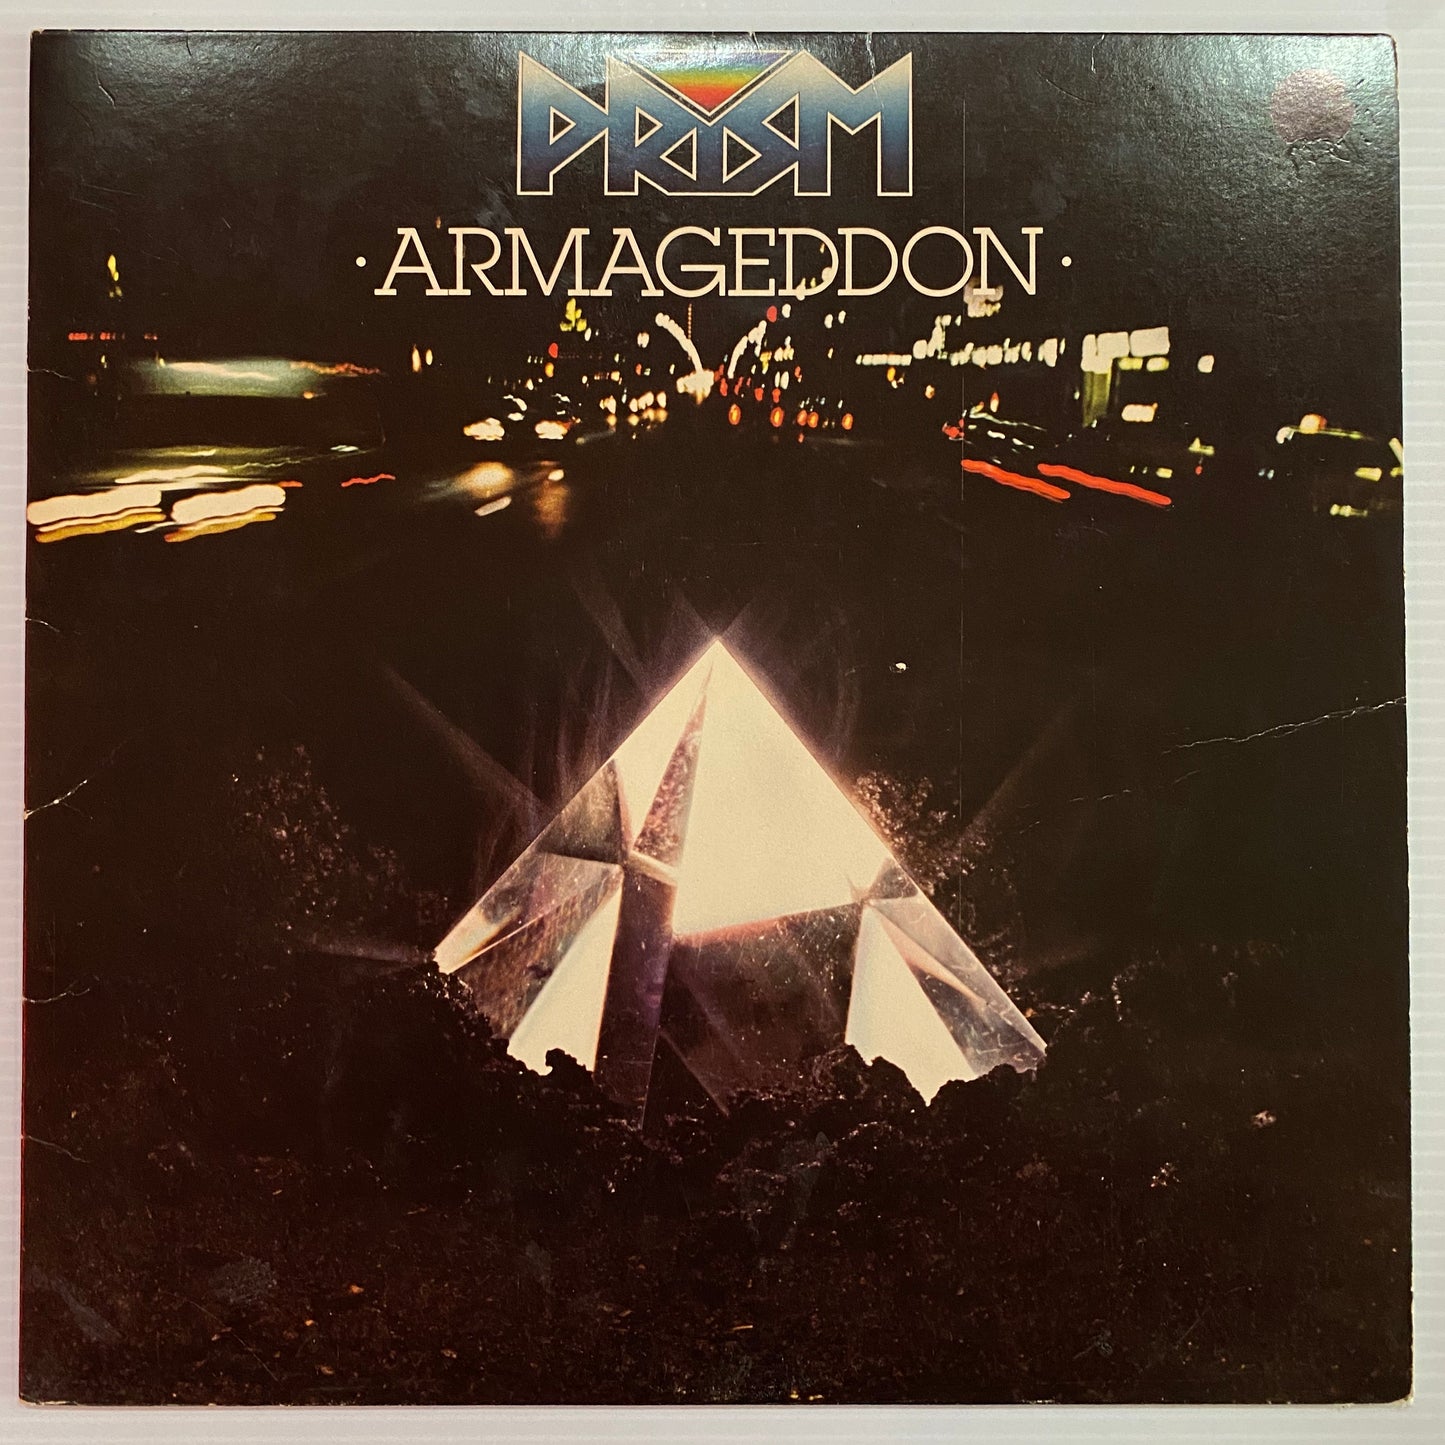 Prism - Armageddon (Vinyl)